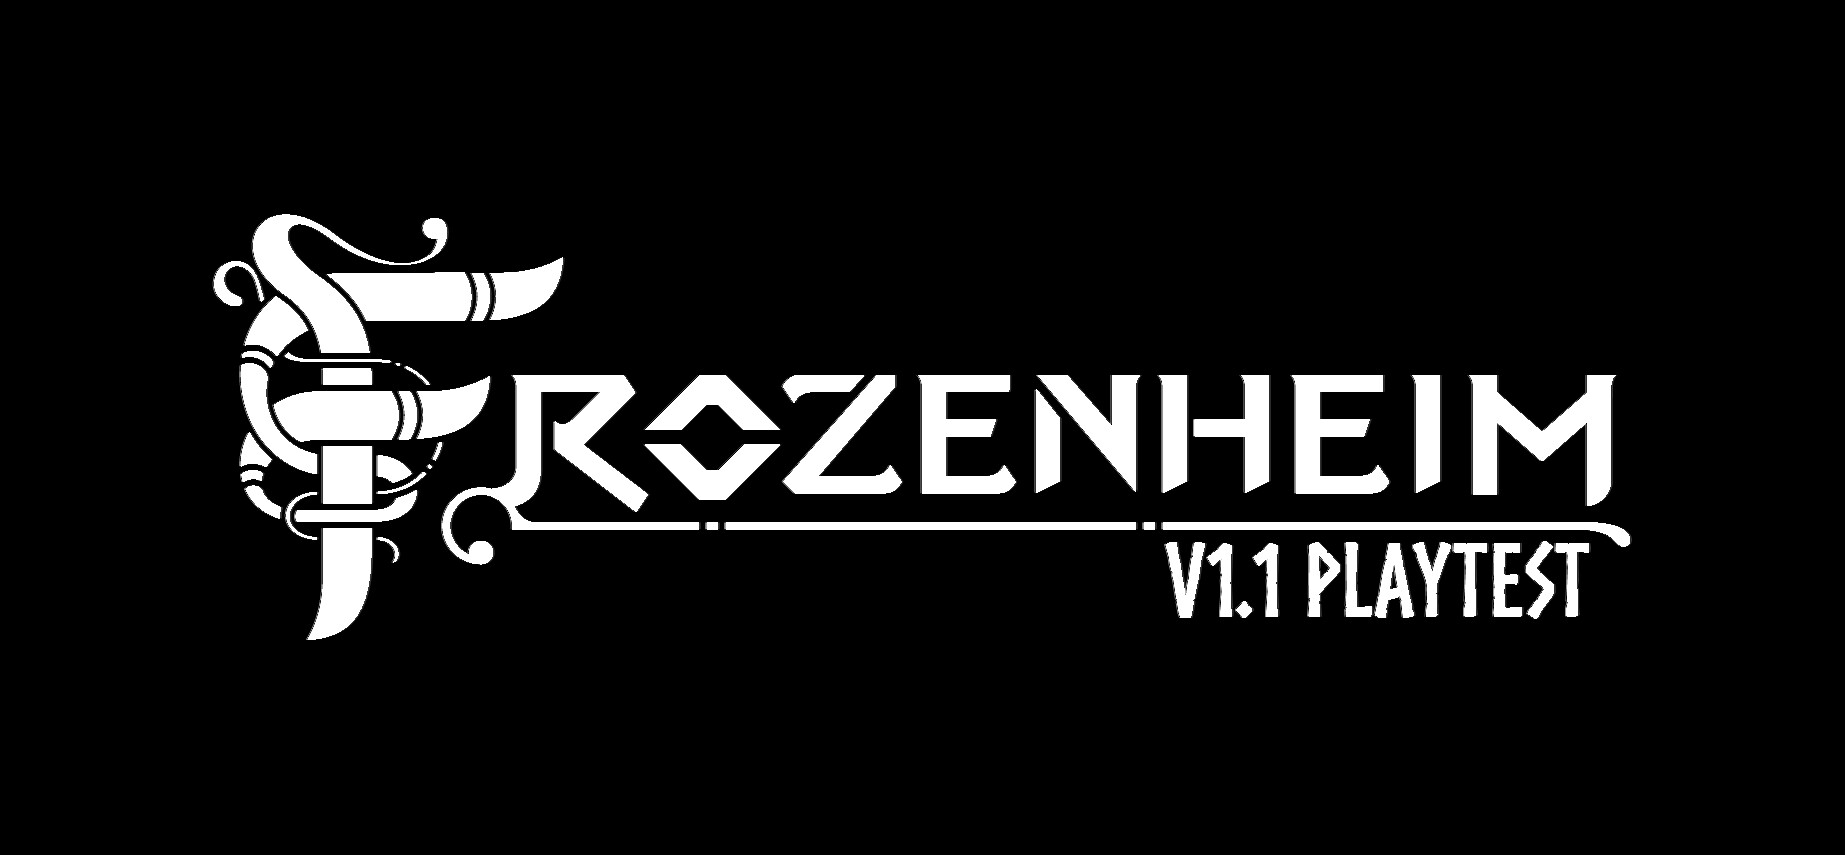 Frozenheim Playtest Featured Screenshot #1